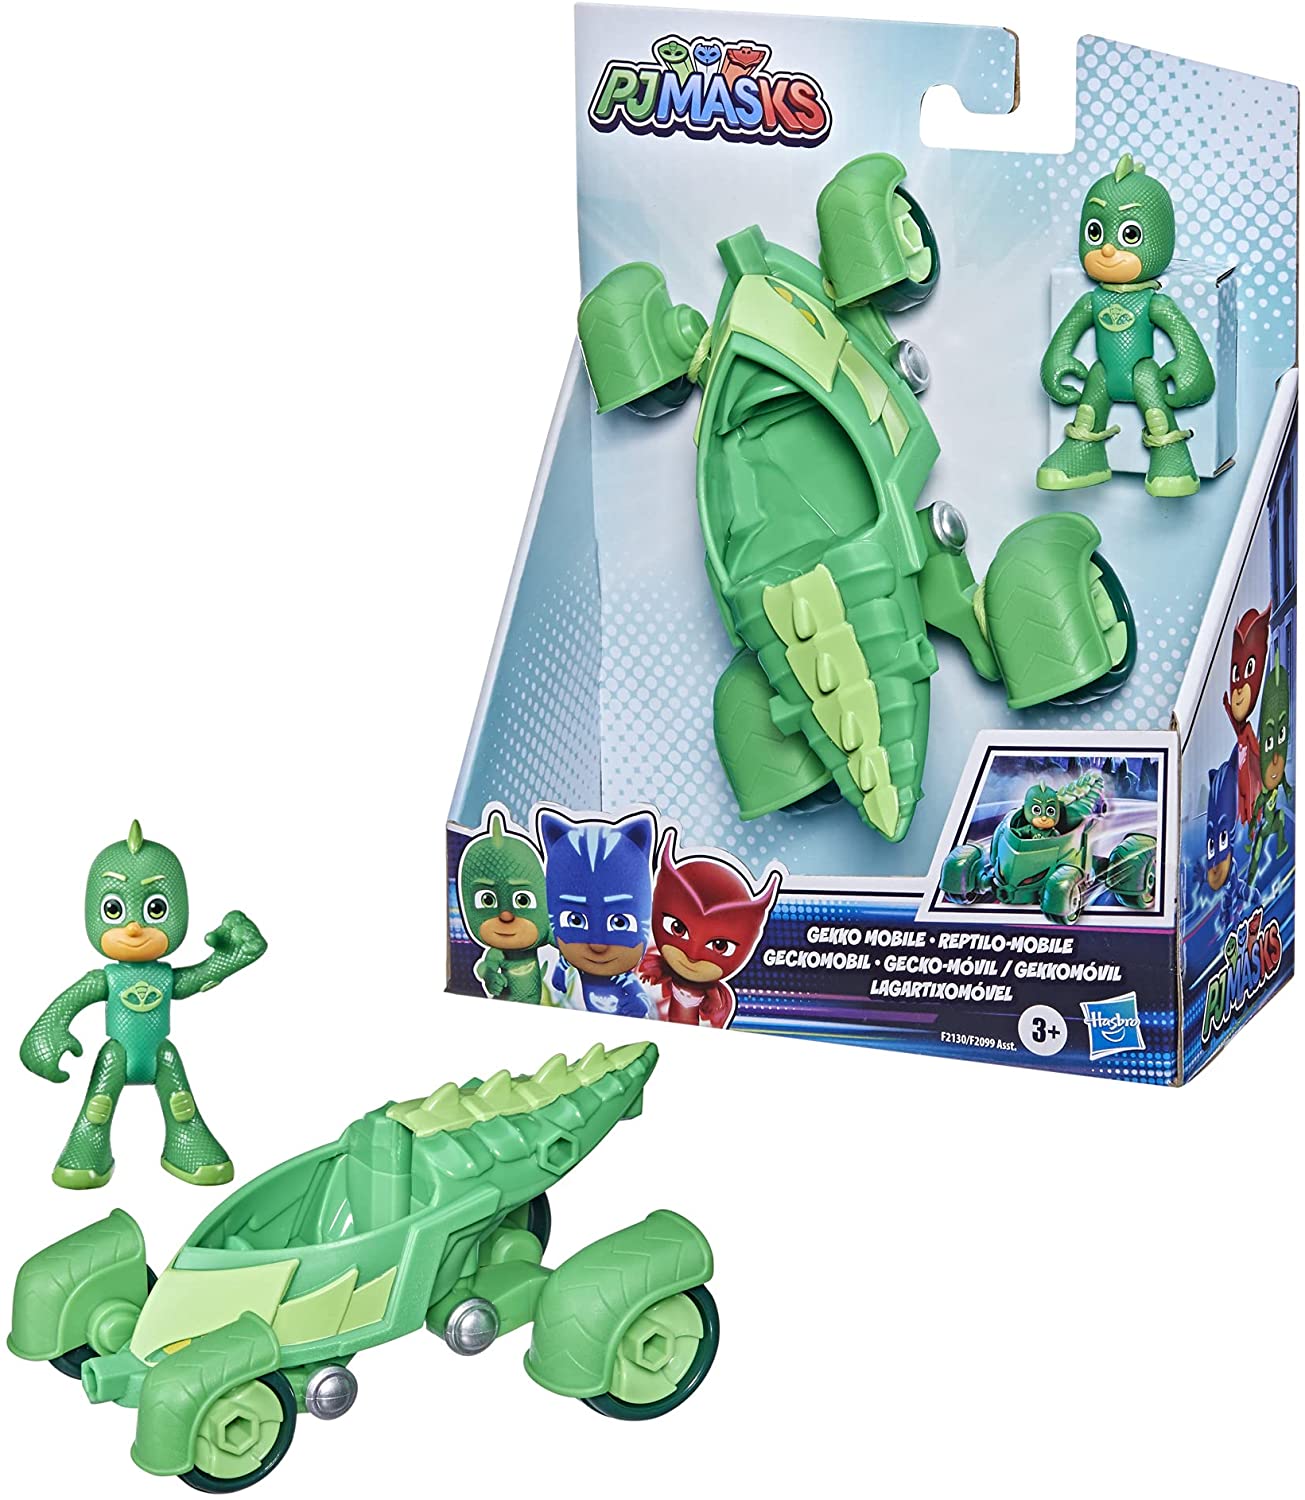 PJ Masks Gekko-Mobile Preschool Toy, Gekko Car with Gekko Action Figure for Kids Ages 3 and Up